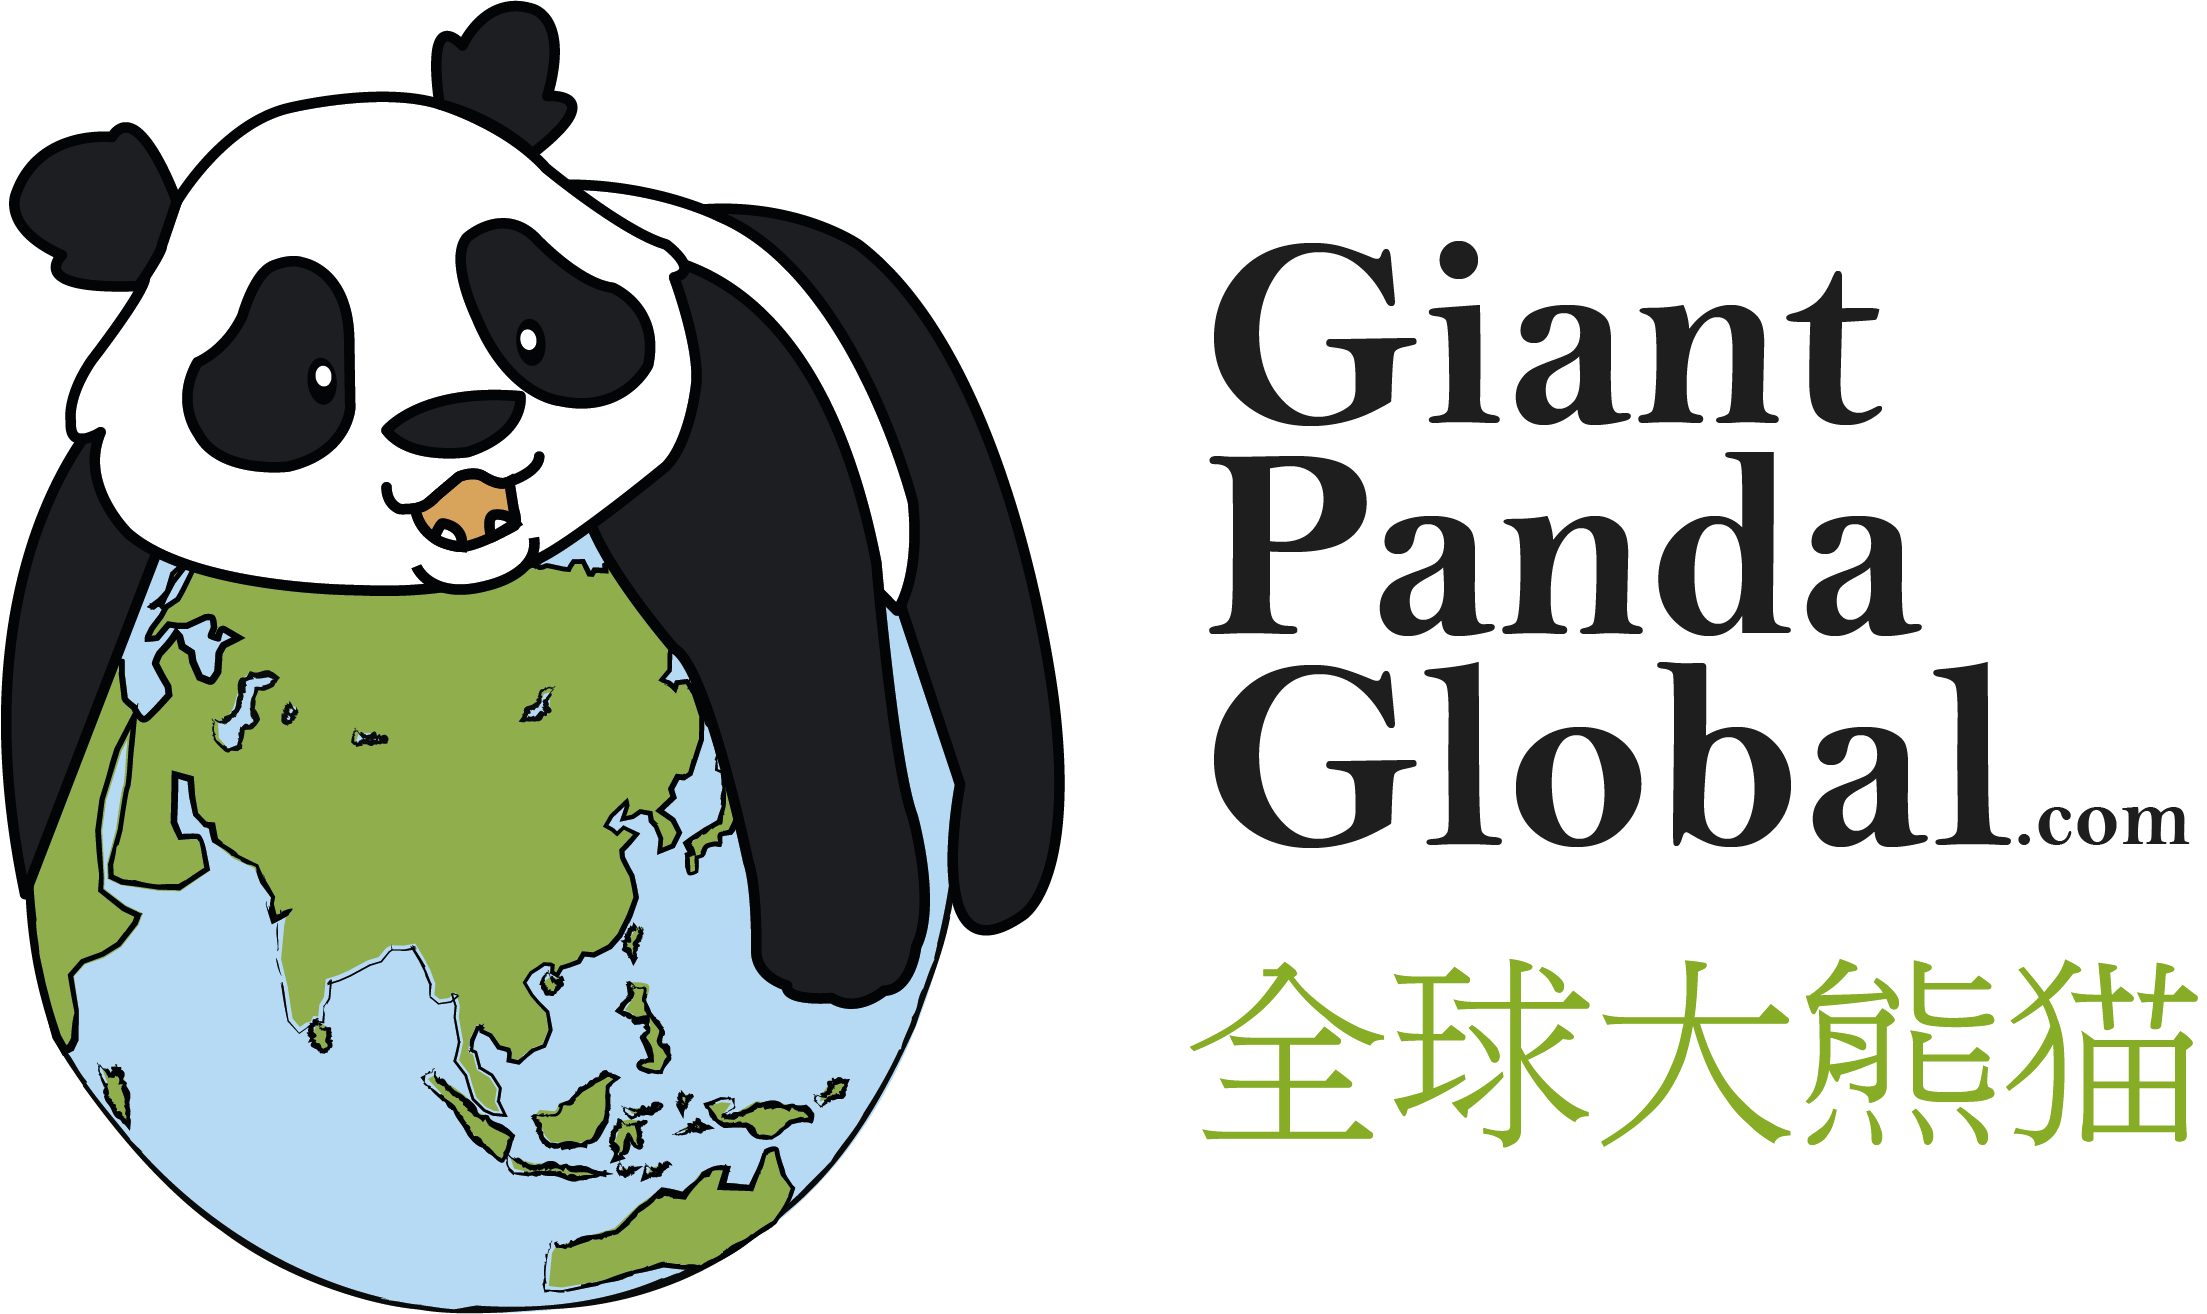 Europe's first panda cub Chu Lin was born 30 years ago @ Zoo Madrid